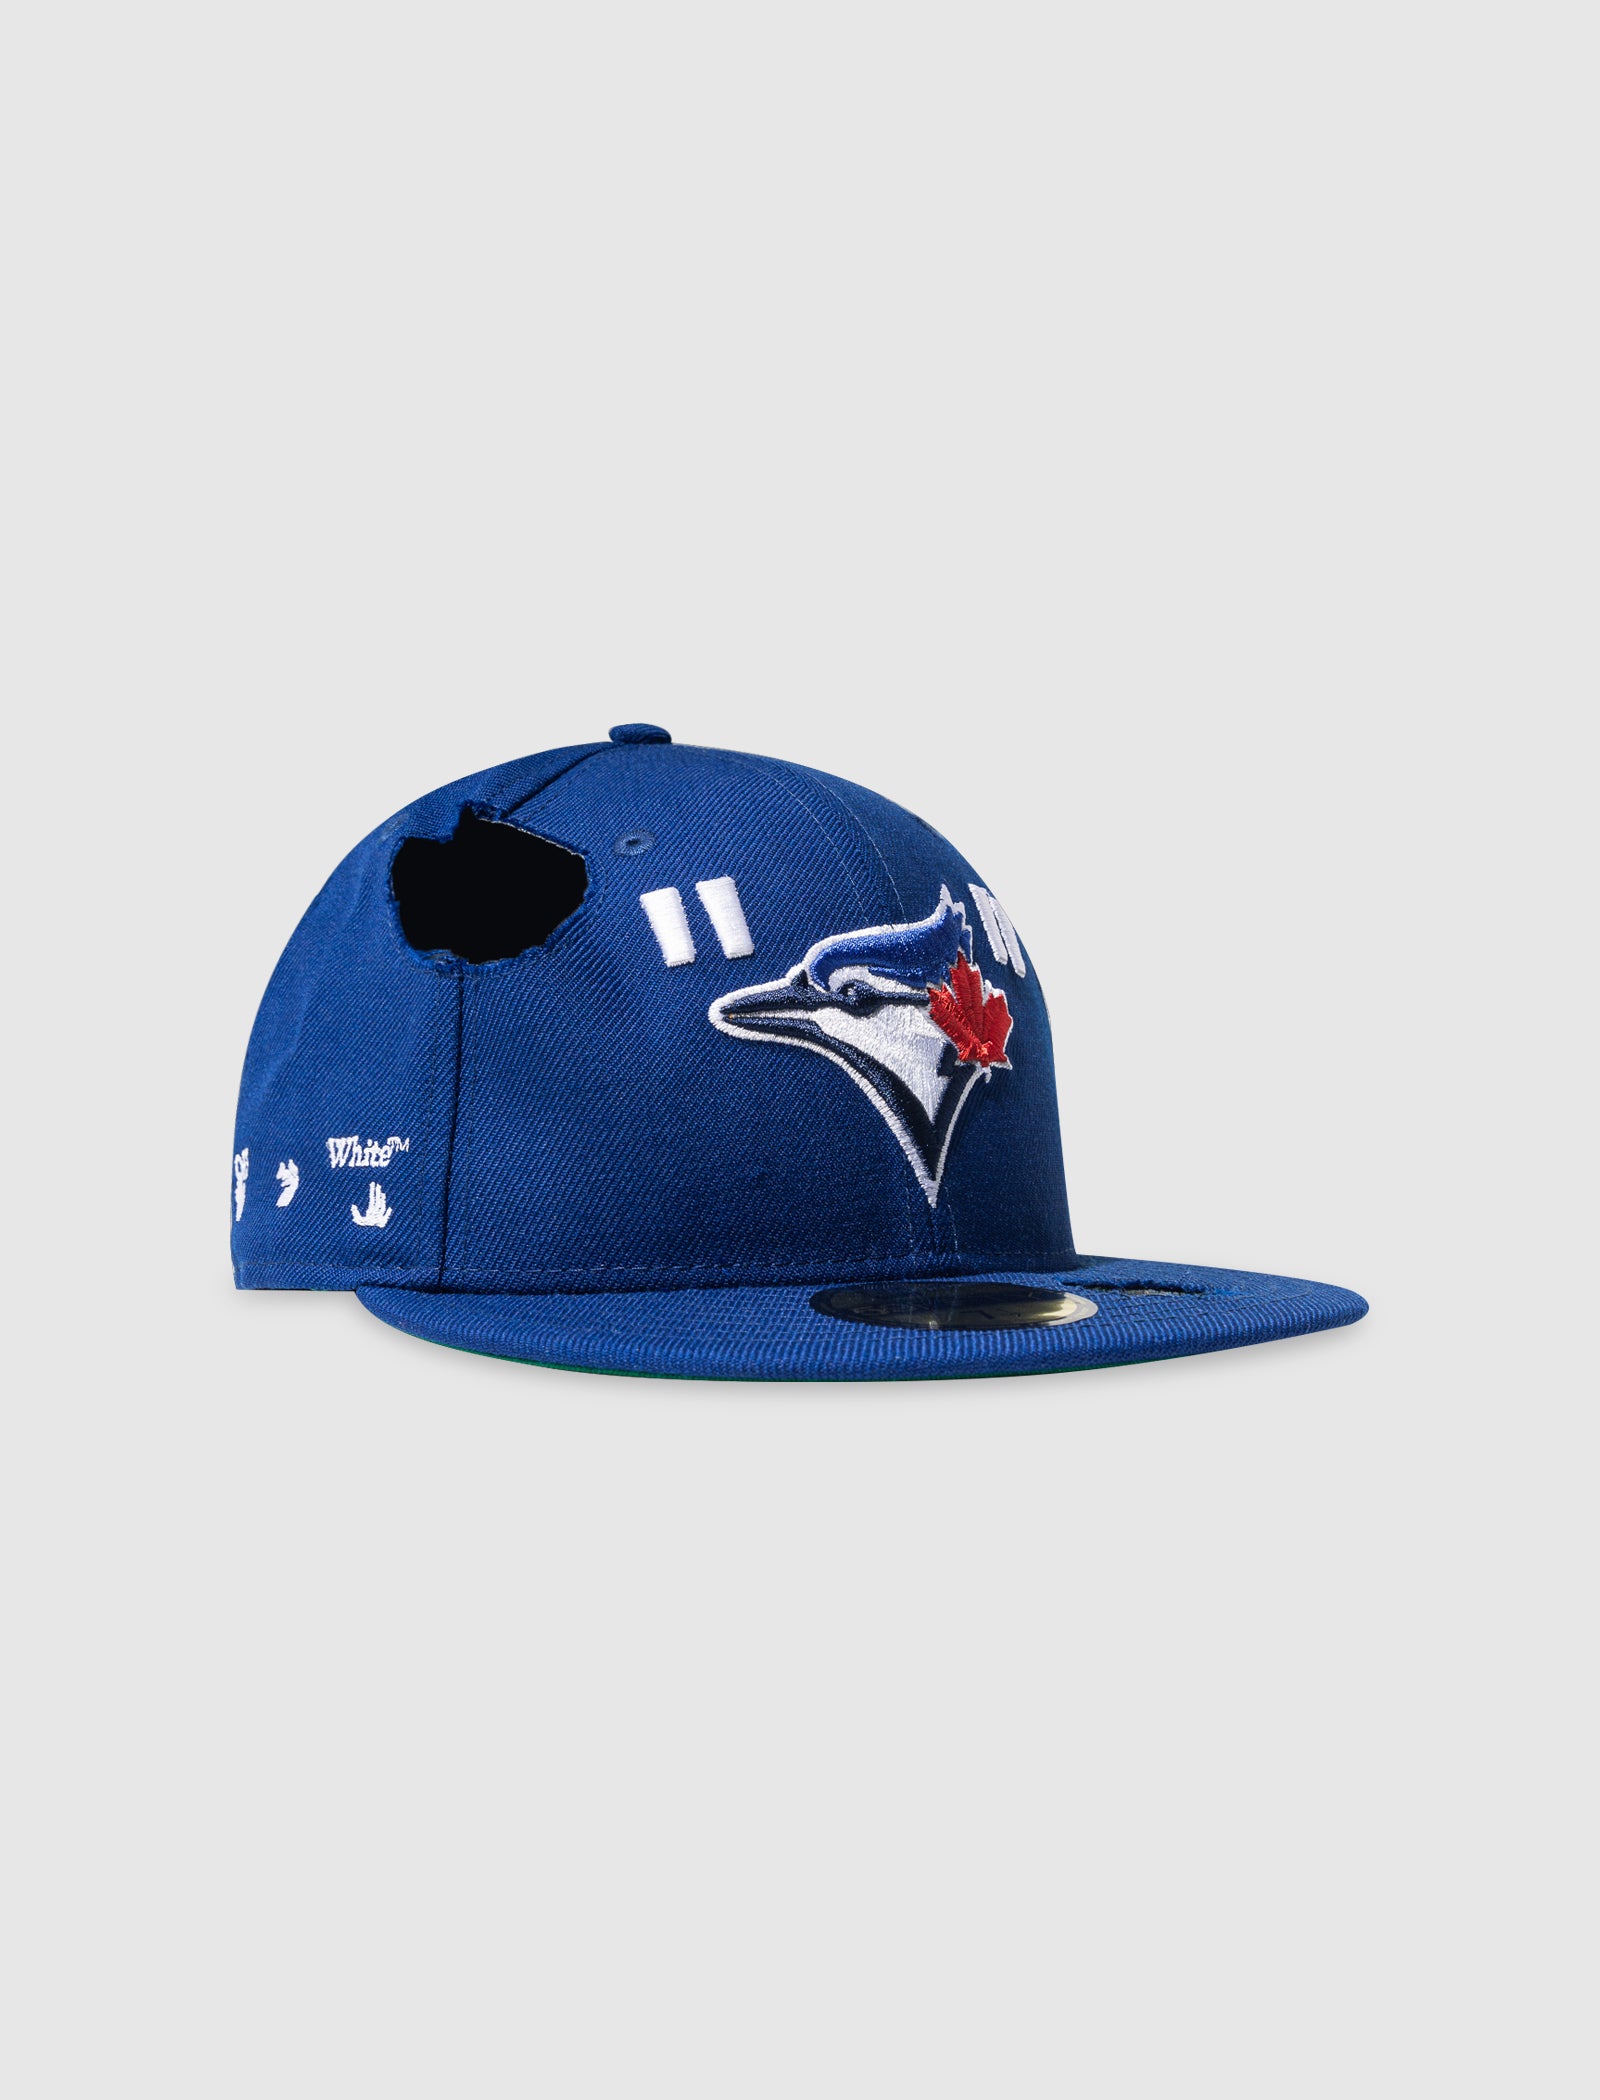 OFF-WHITE x MLB TOTONTO BLUEJAYS CAP